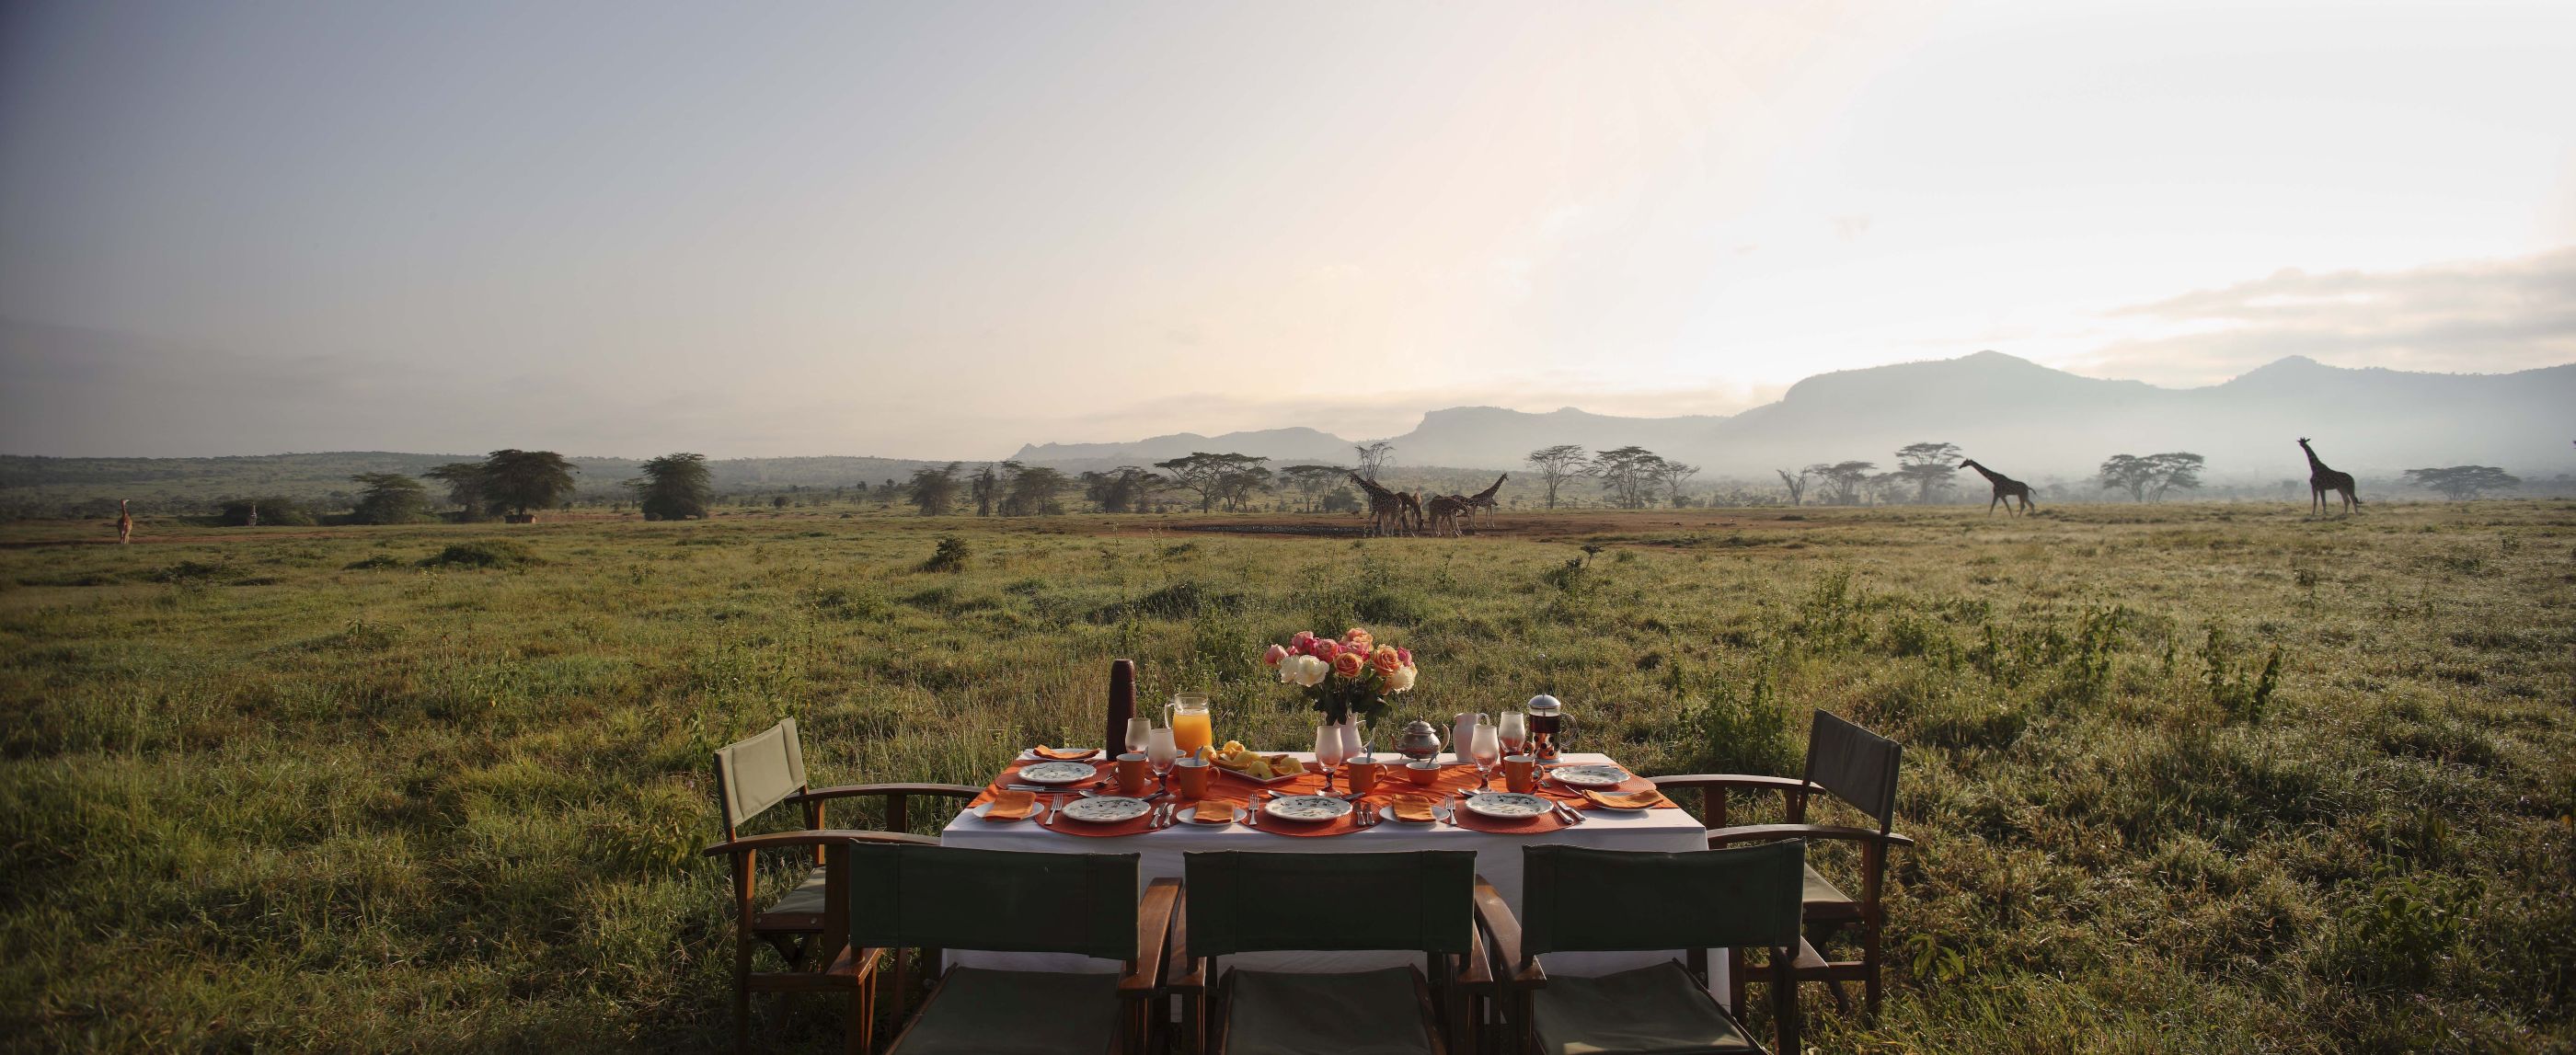 Breakfast on the plains at Enasoit in Kenya